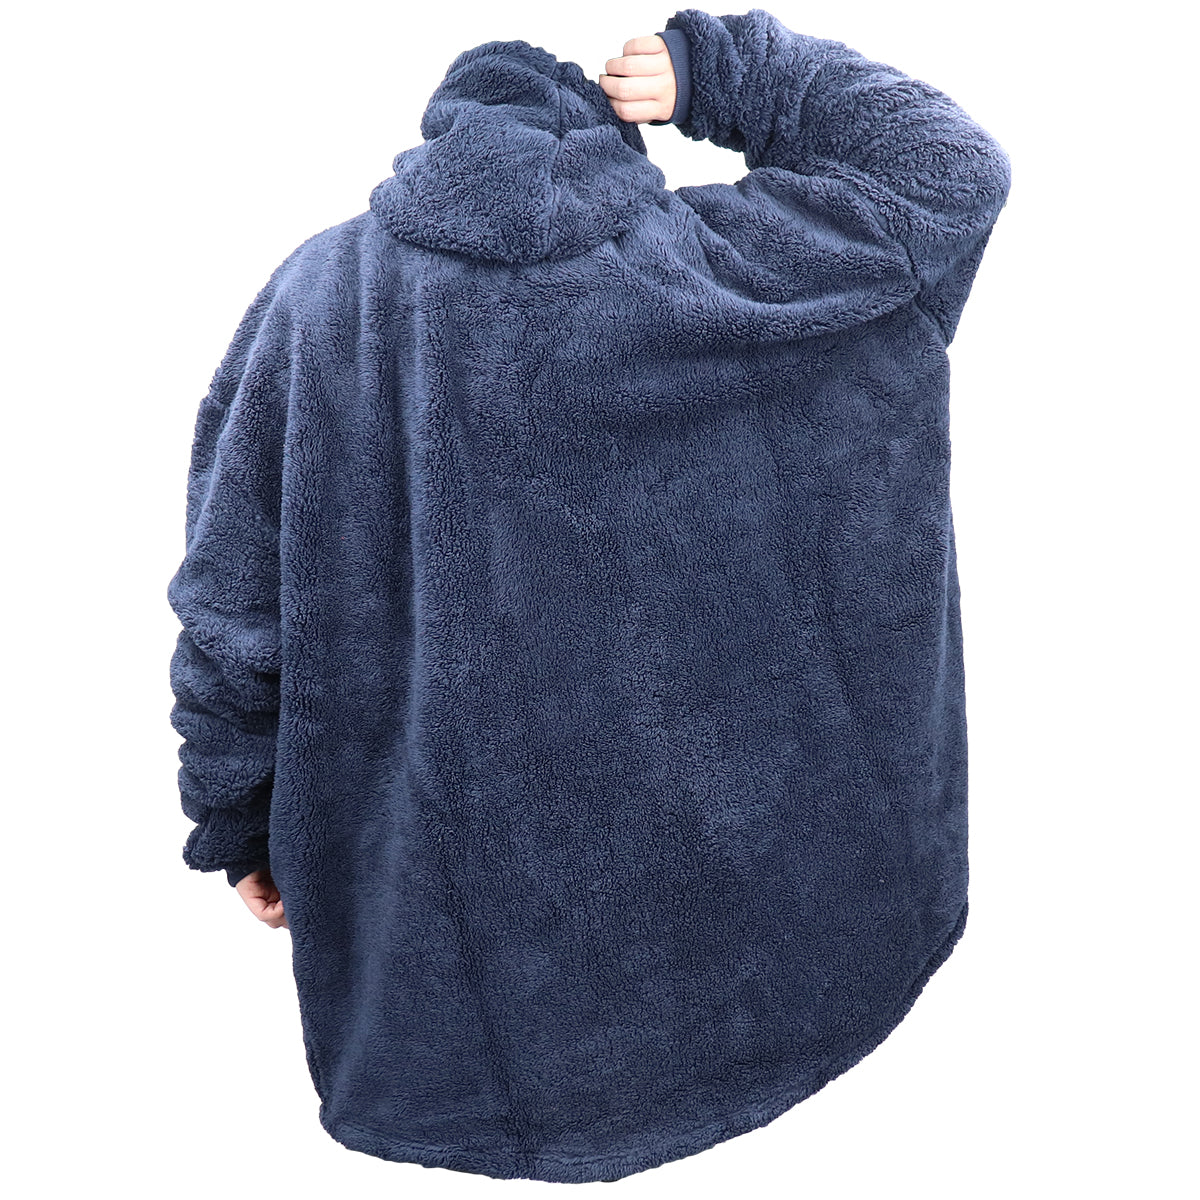 Oversized Soft Pullover Plain Hoodie Warm Fleece Blanket Plush Winter Sweatshirt, Hot Pink, Adult